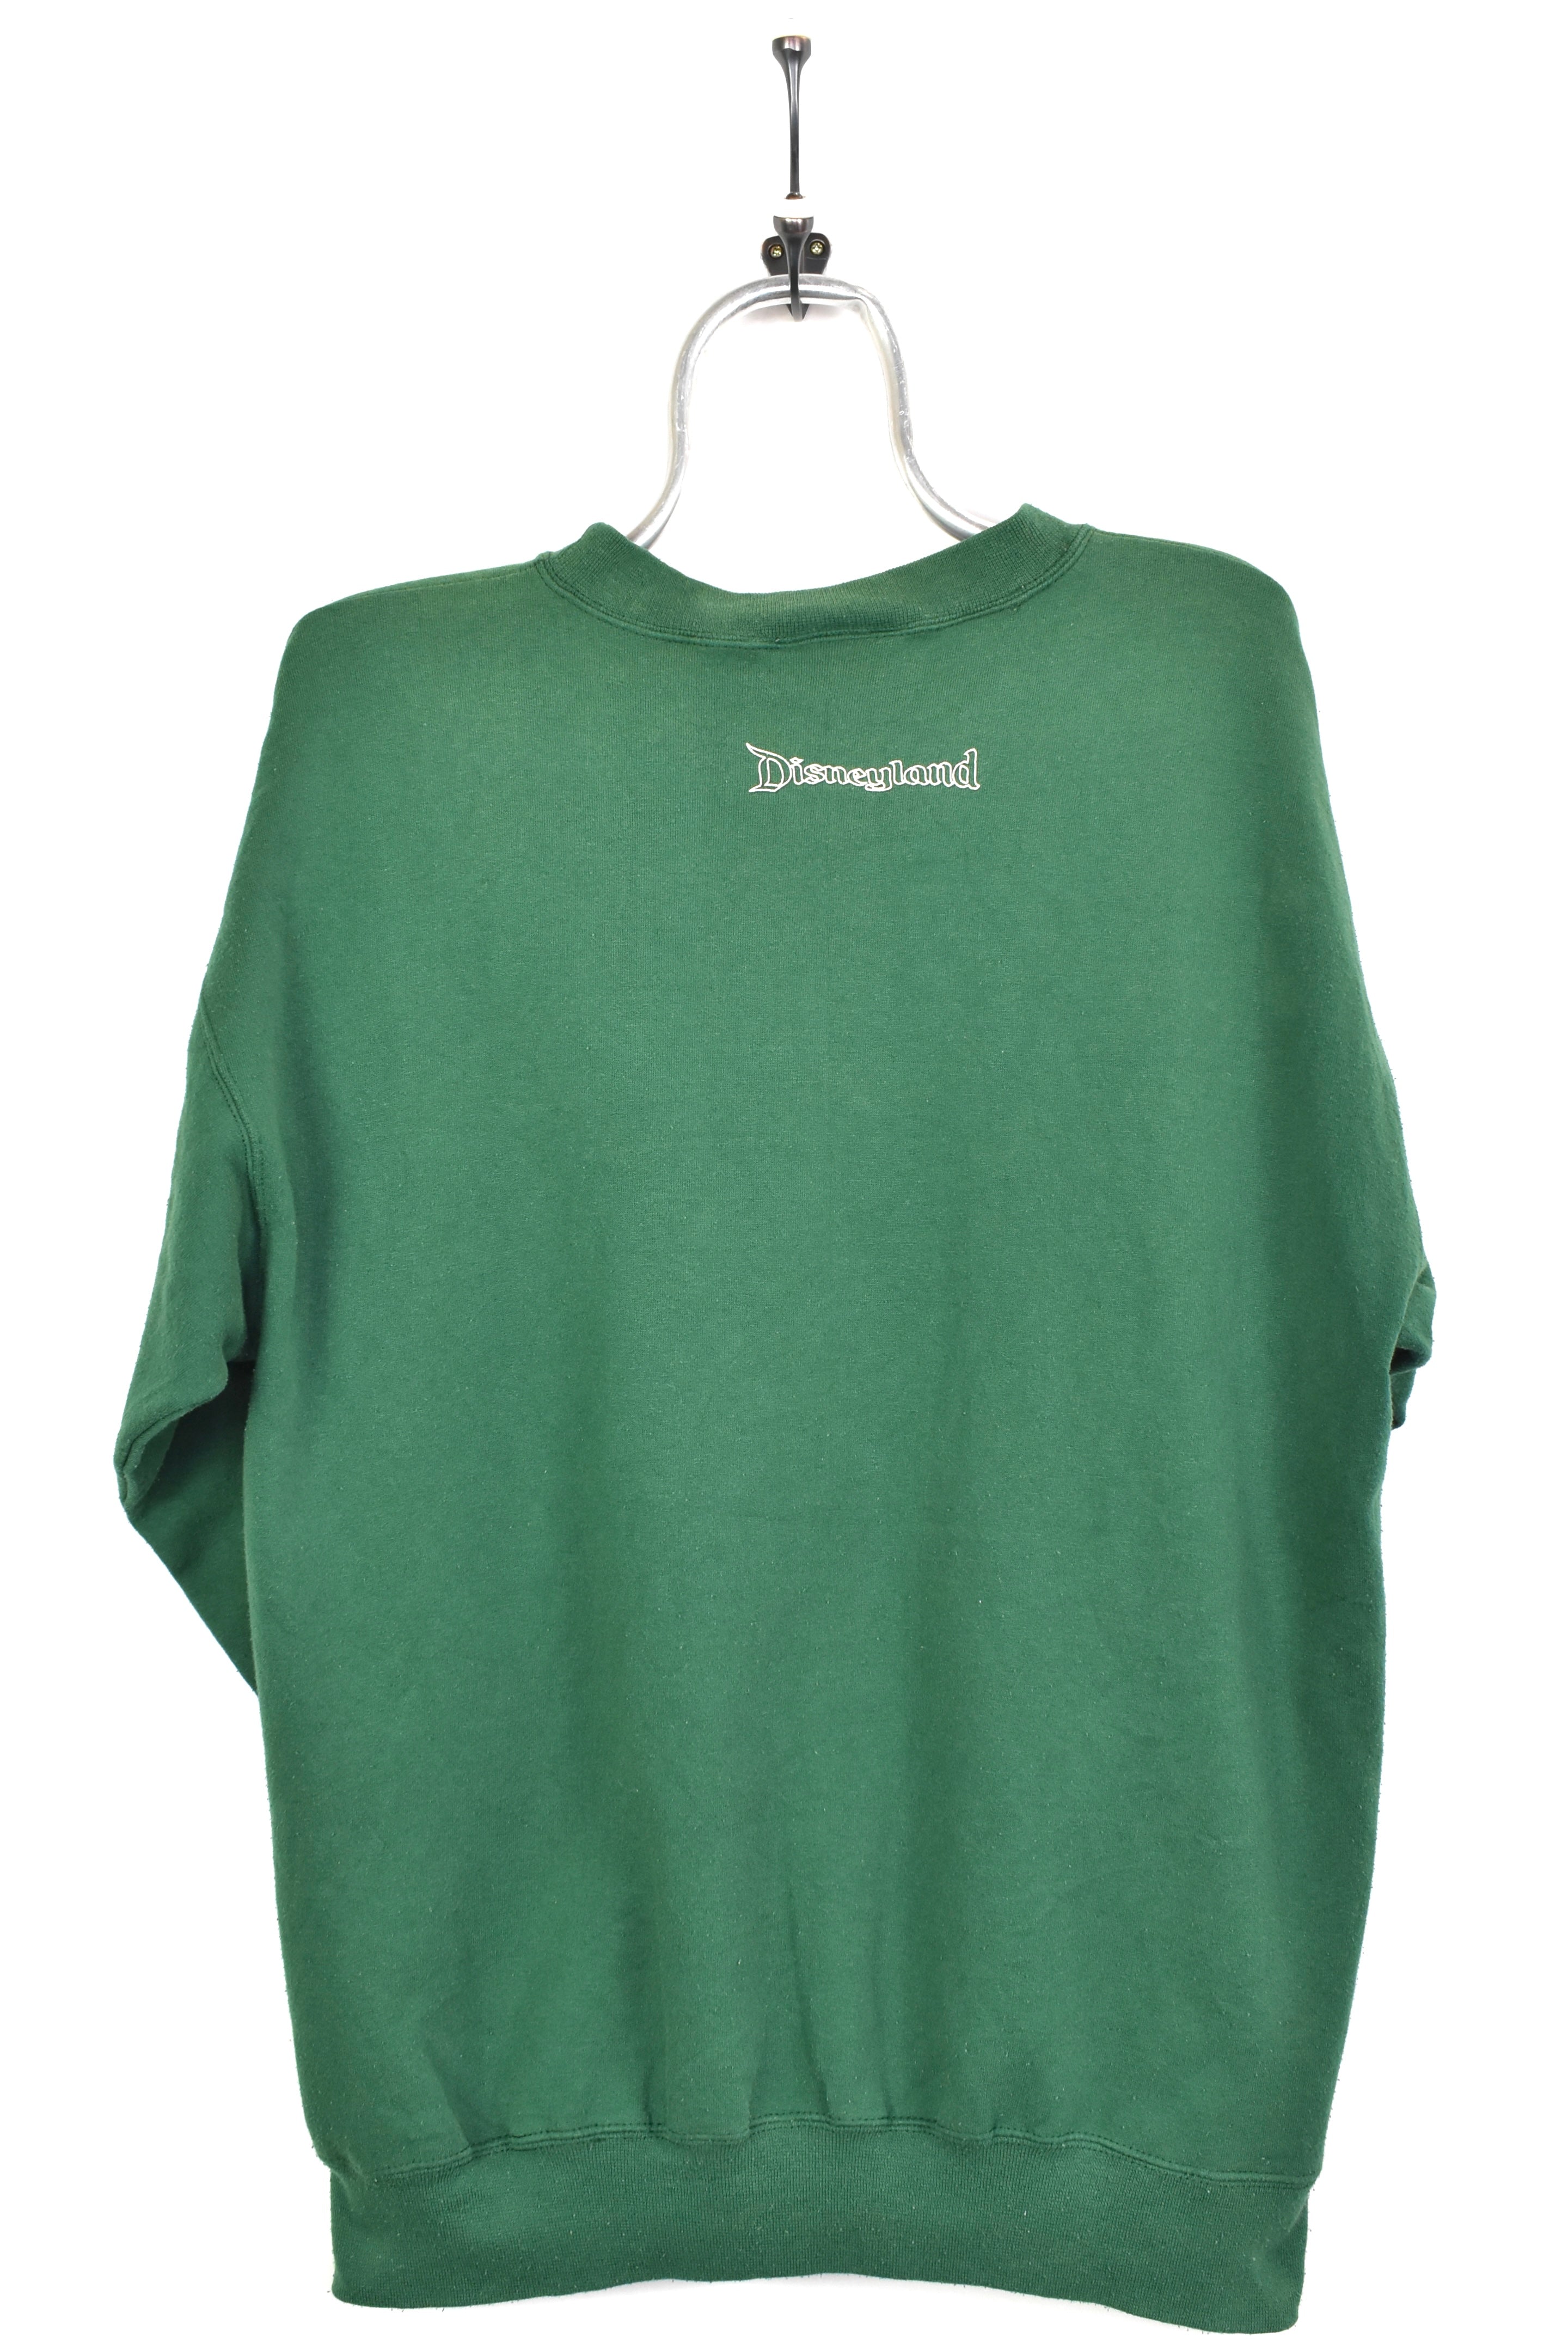 Vintage Tigger sweatshirt, Disney green graphic crewneck - large